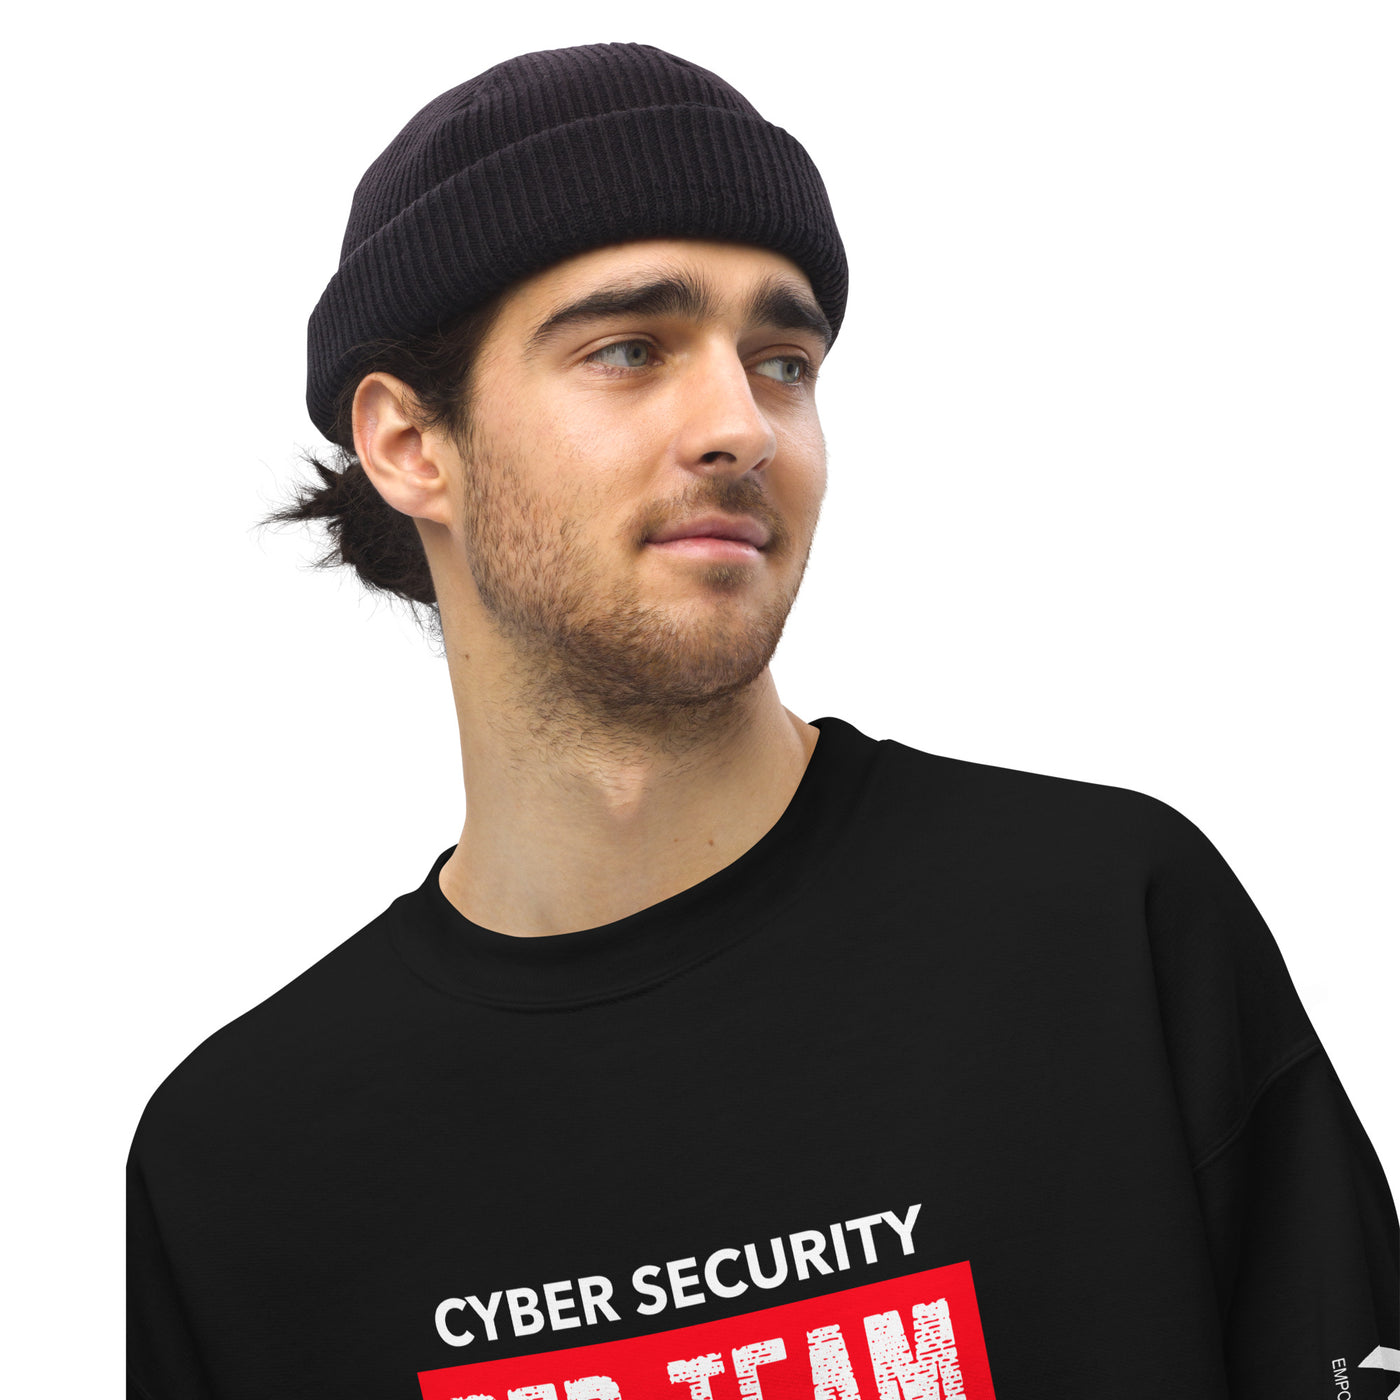 Cyber Security Red Team V1 - Unisex Sweatshirt